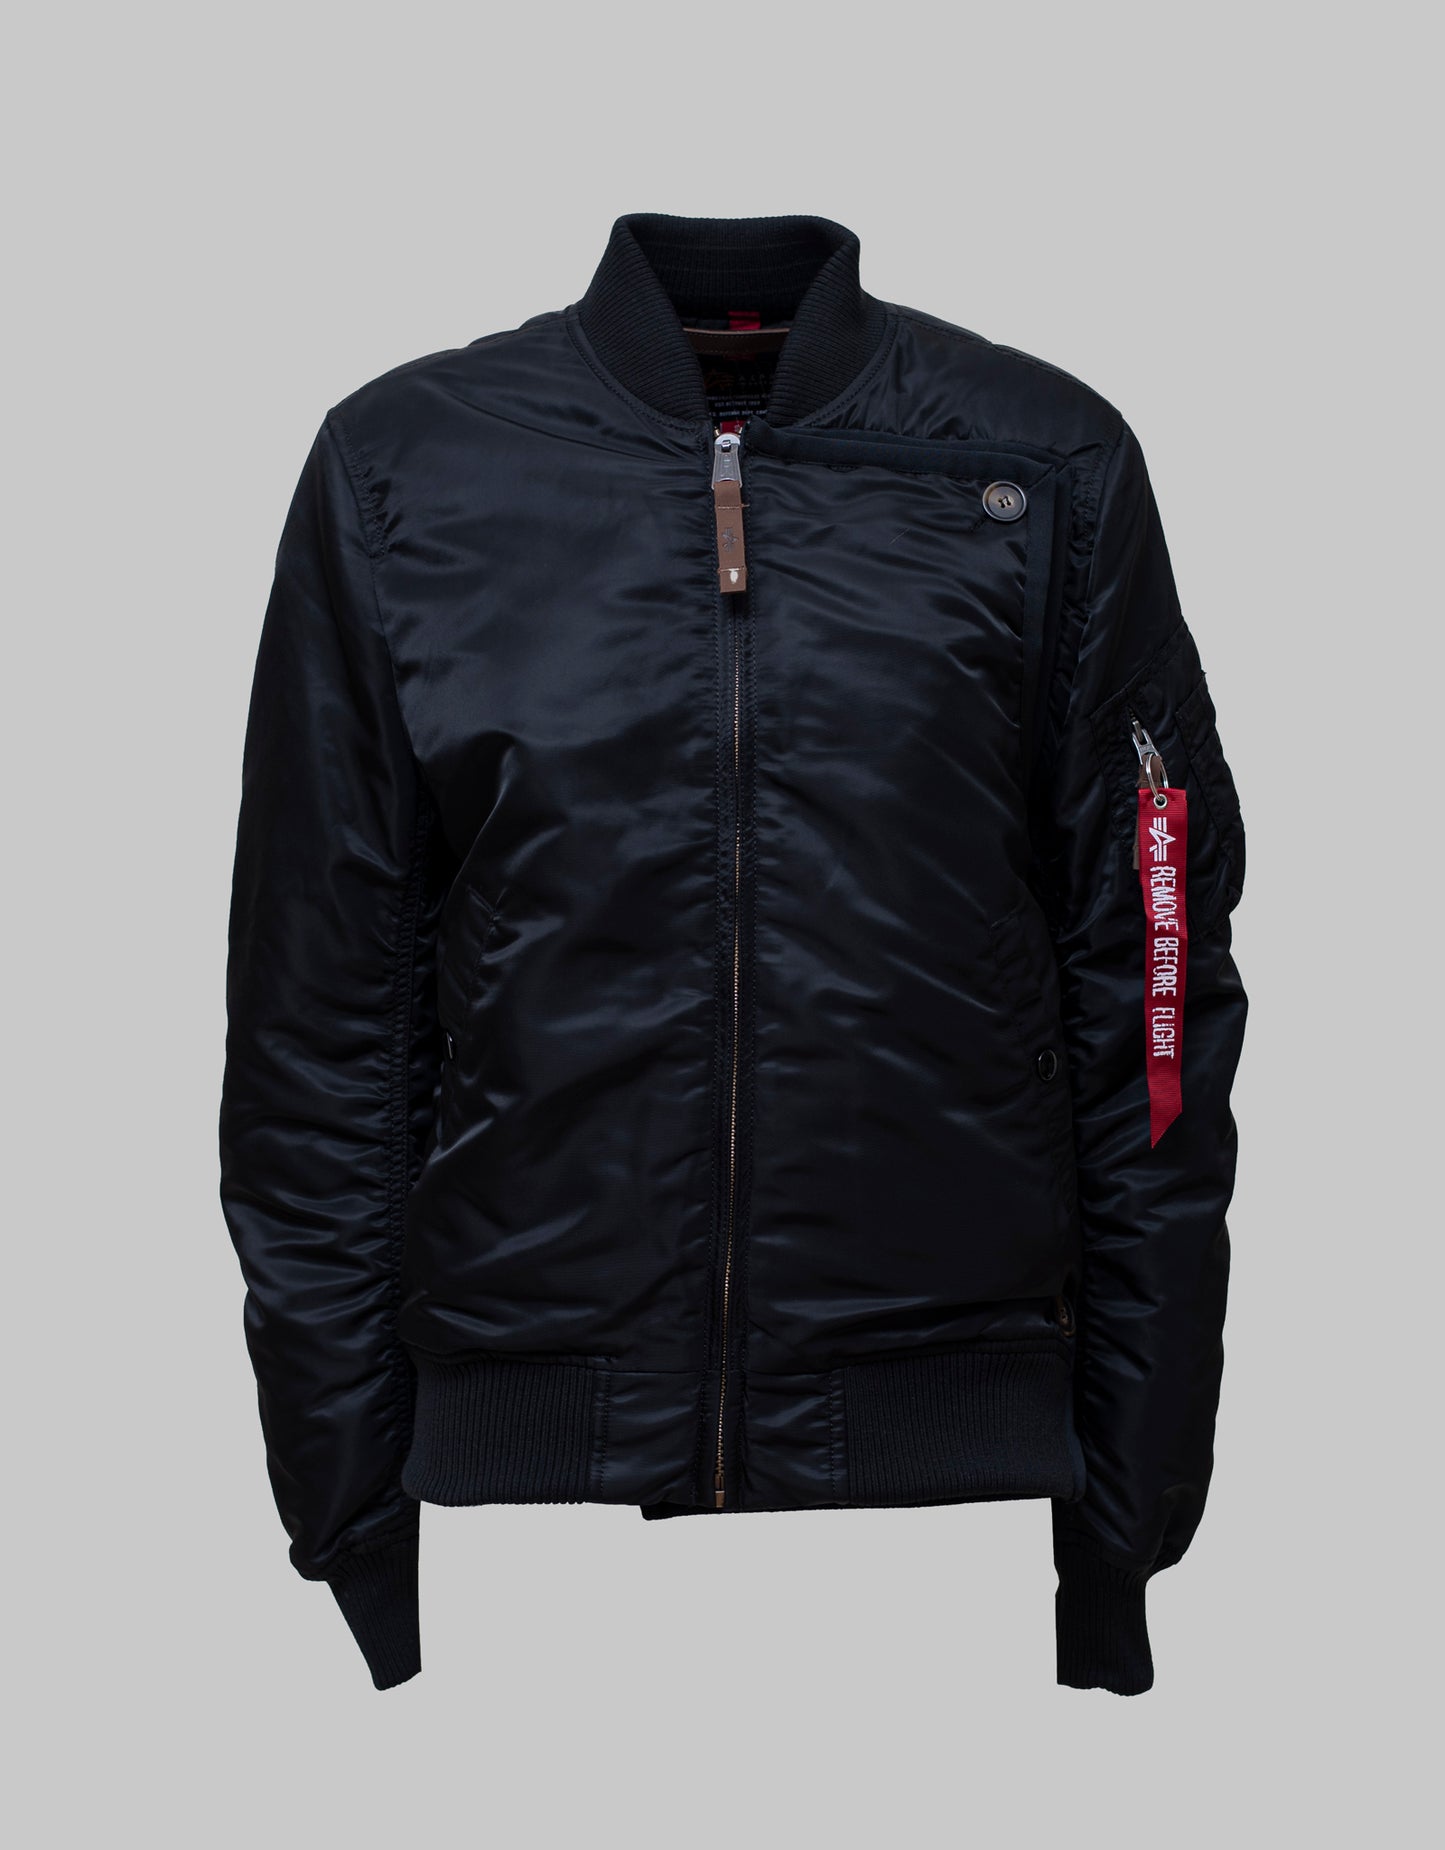 Lutz black bomber jacket